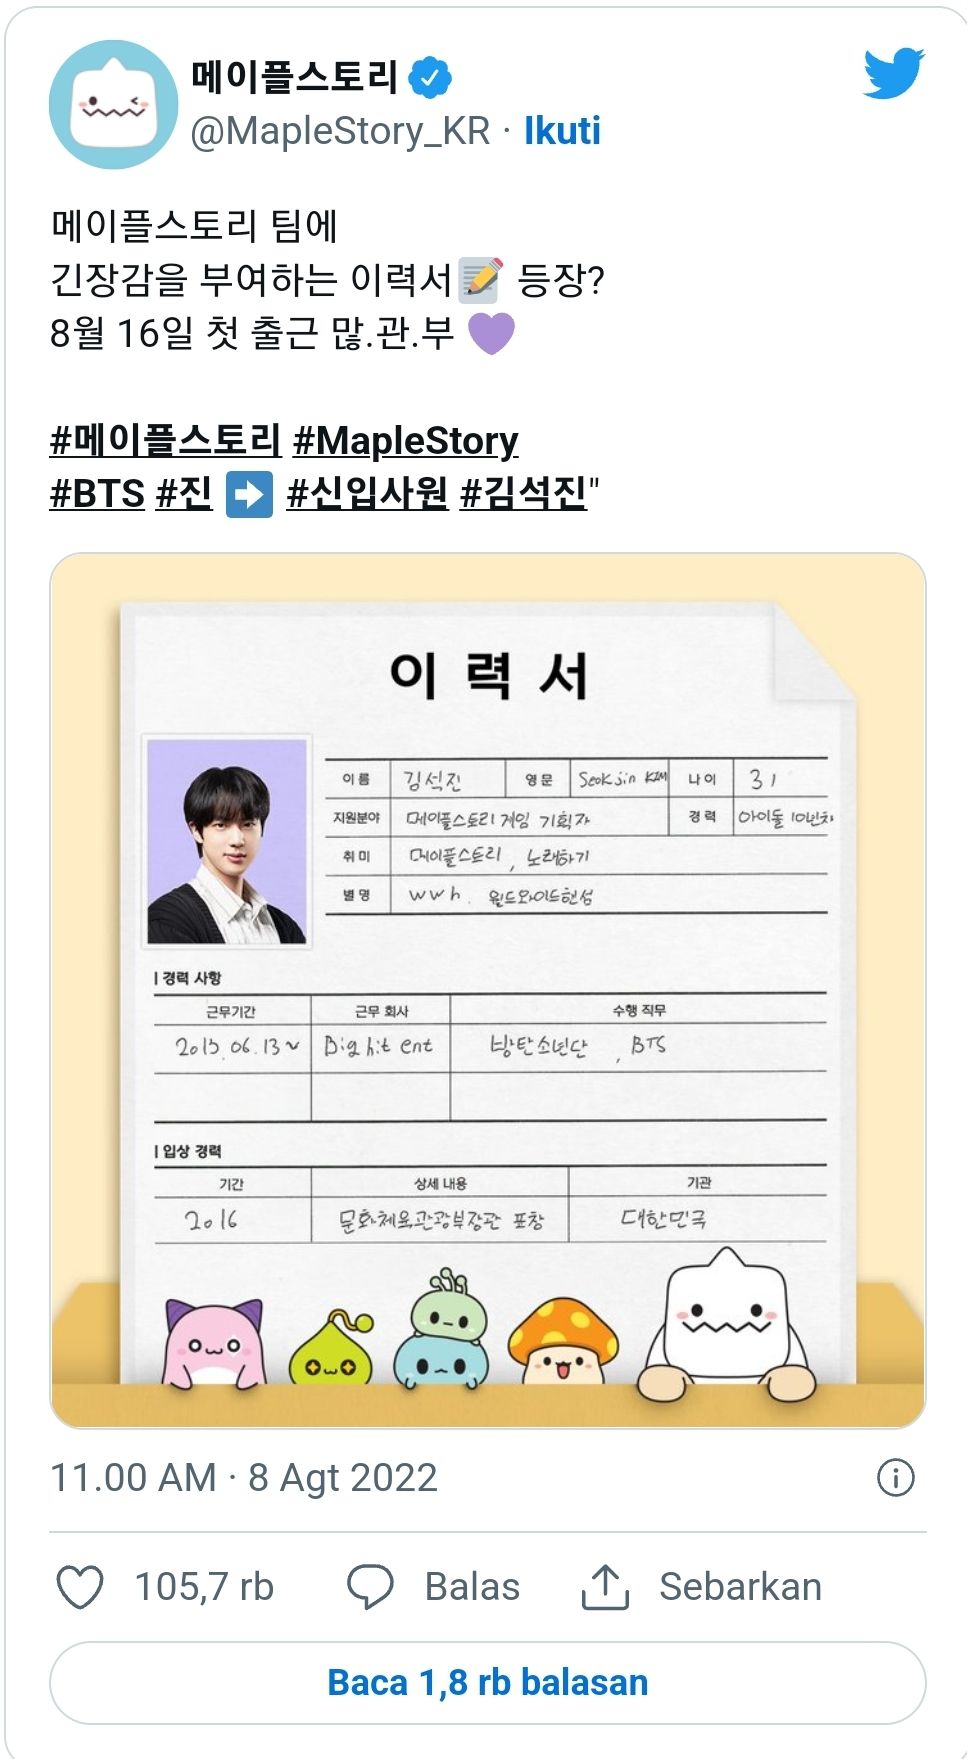 Resume Jin BTS/@MapleStory_KR